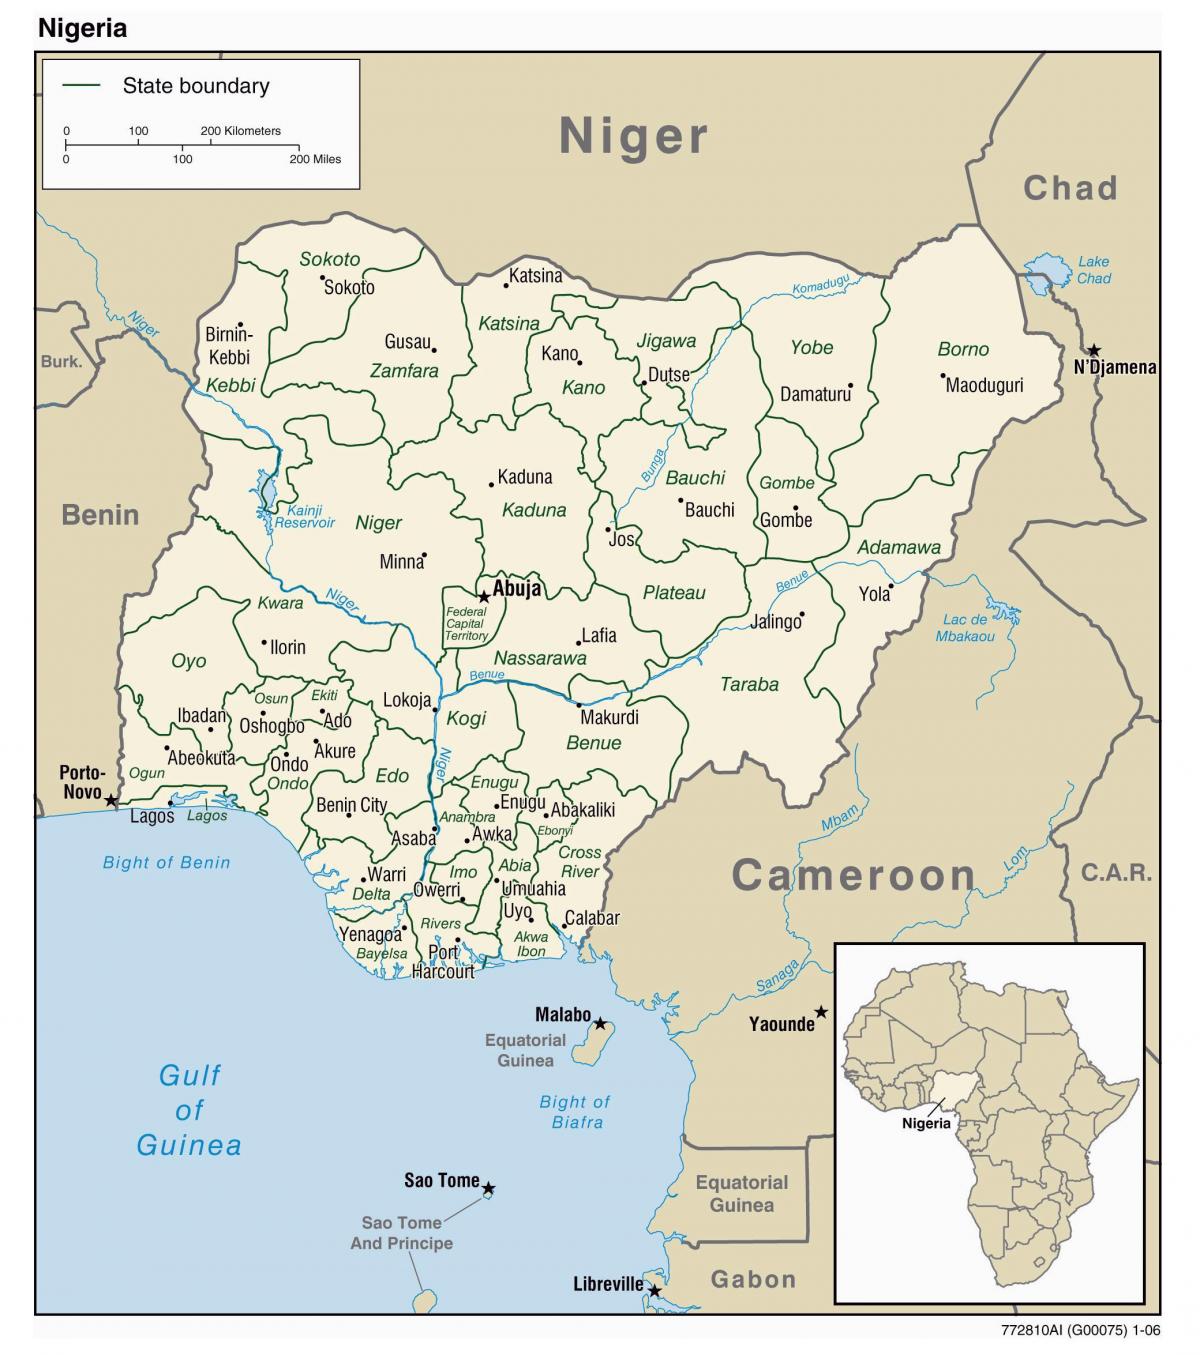 harta e nigeria me qytetet